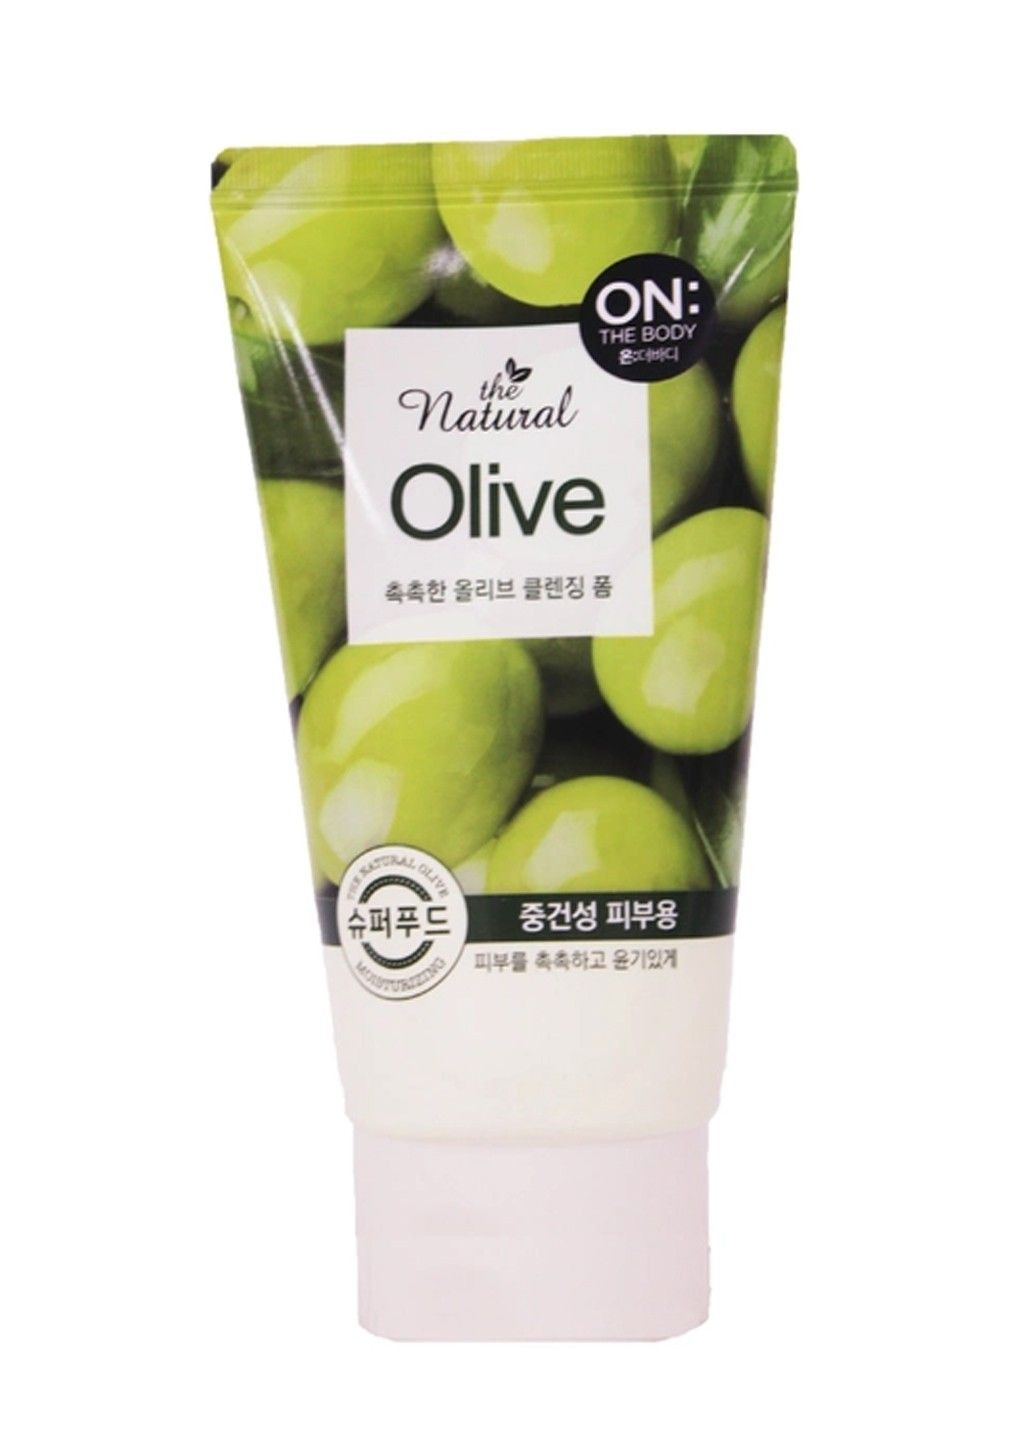 Очищающая пена HH OTB The Natural Olivе с маслом оливы, 120 мл LG (278048708)